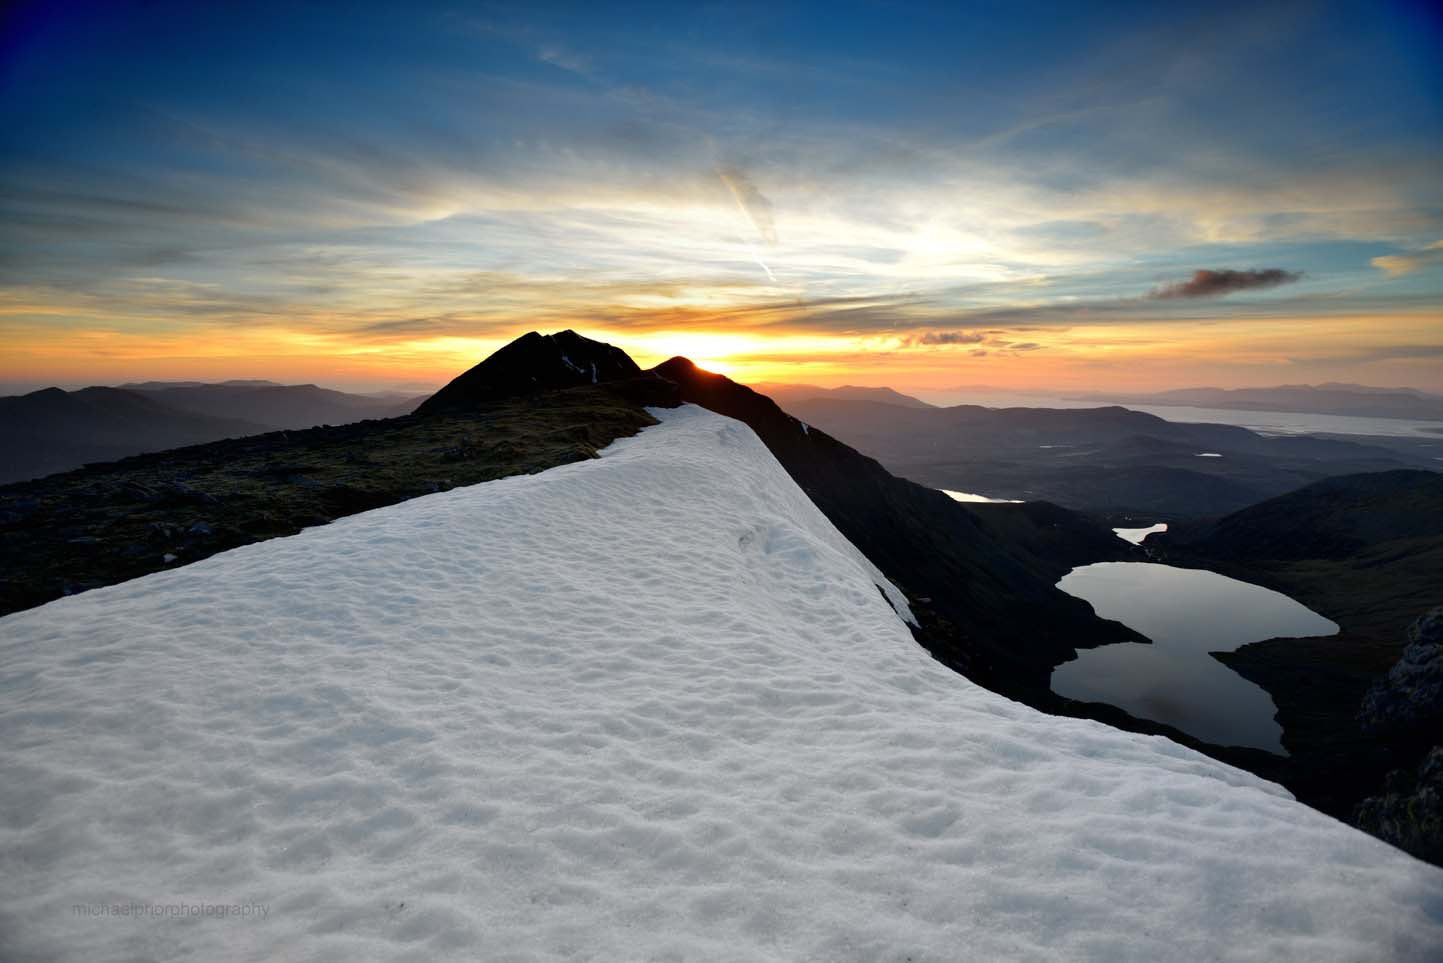 Snowy Ridge At Sunset - Carrauntoohil - Michael Prior Photography 